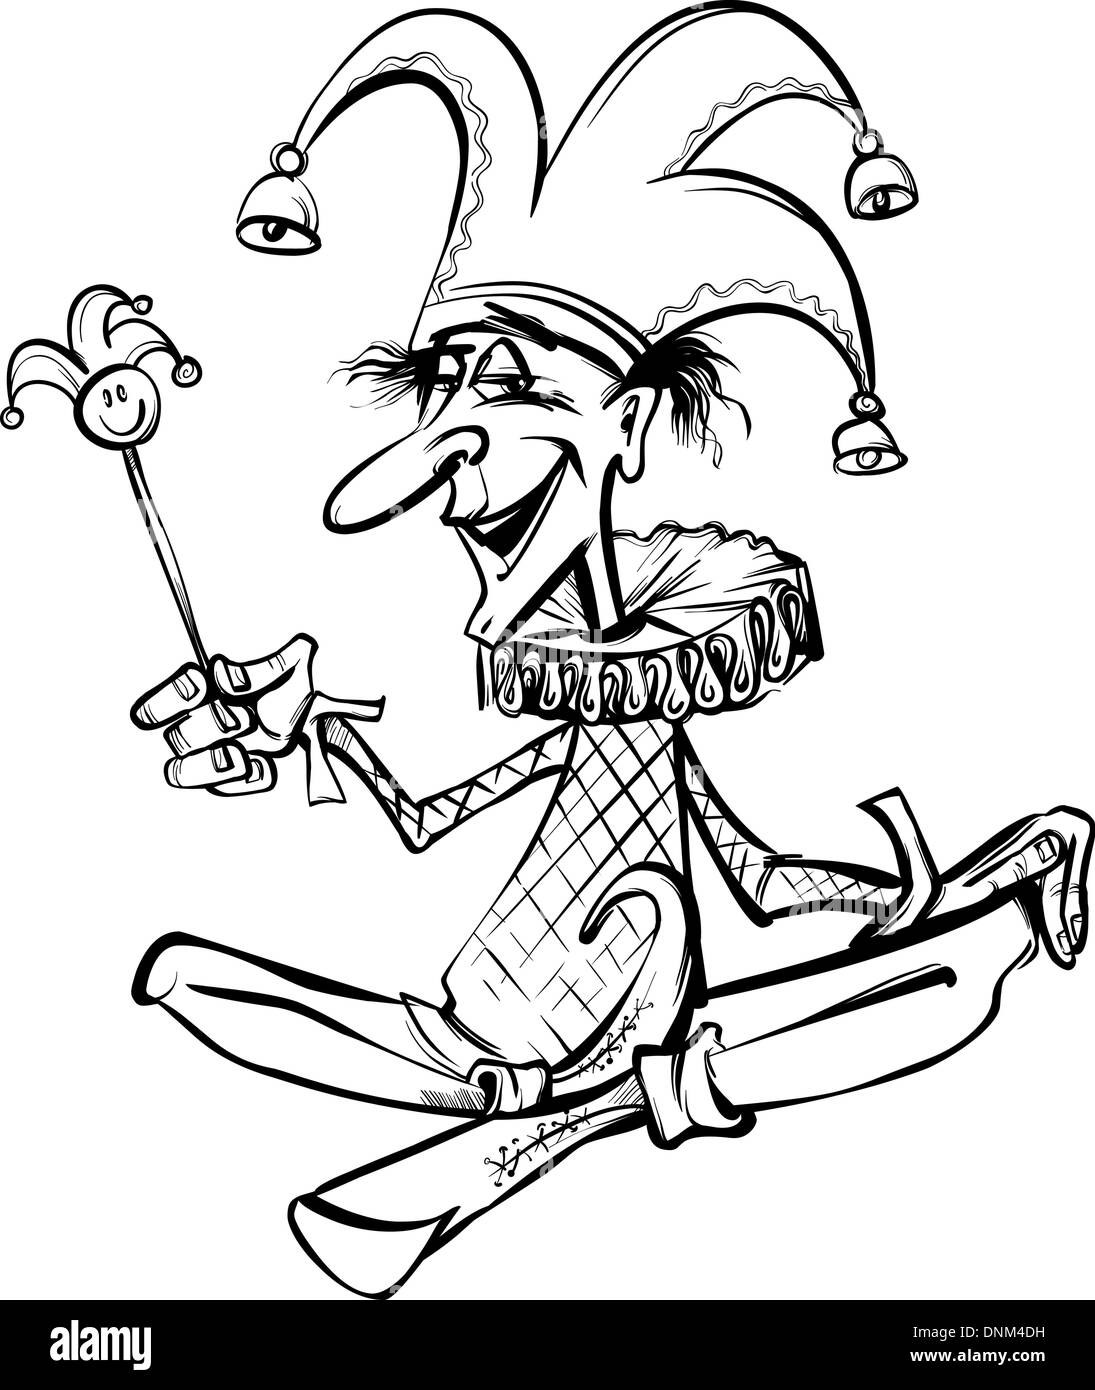 Black and White Cartoon Illustration of Funny Court Jester or Joker Stock Vector